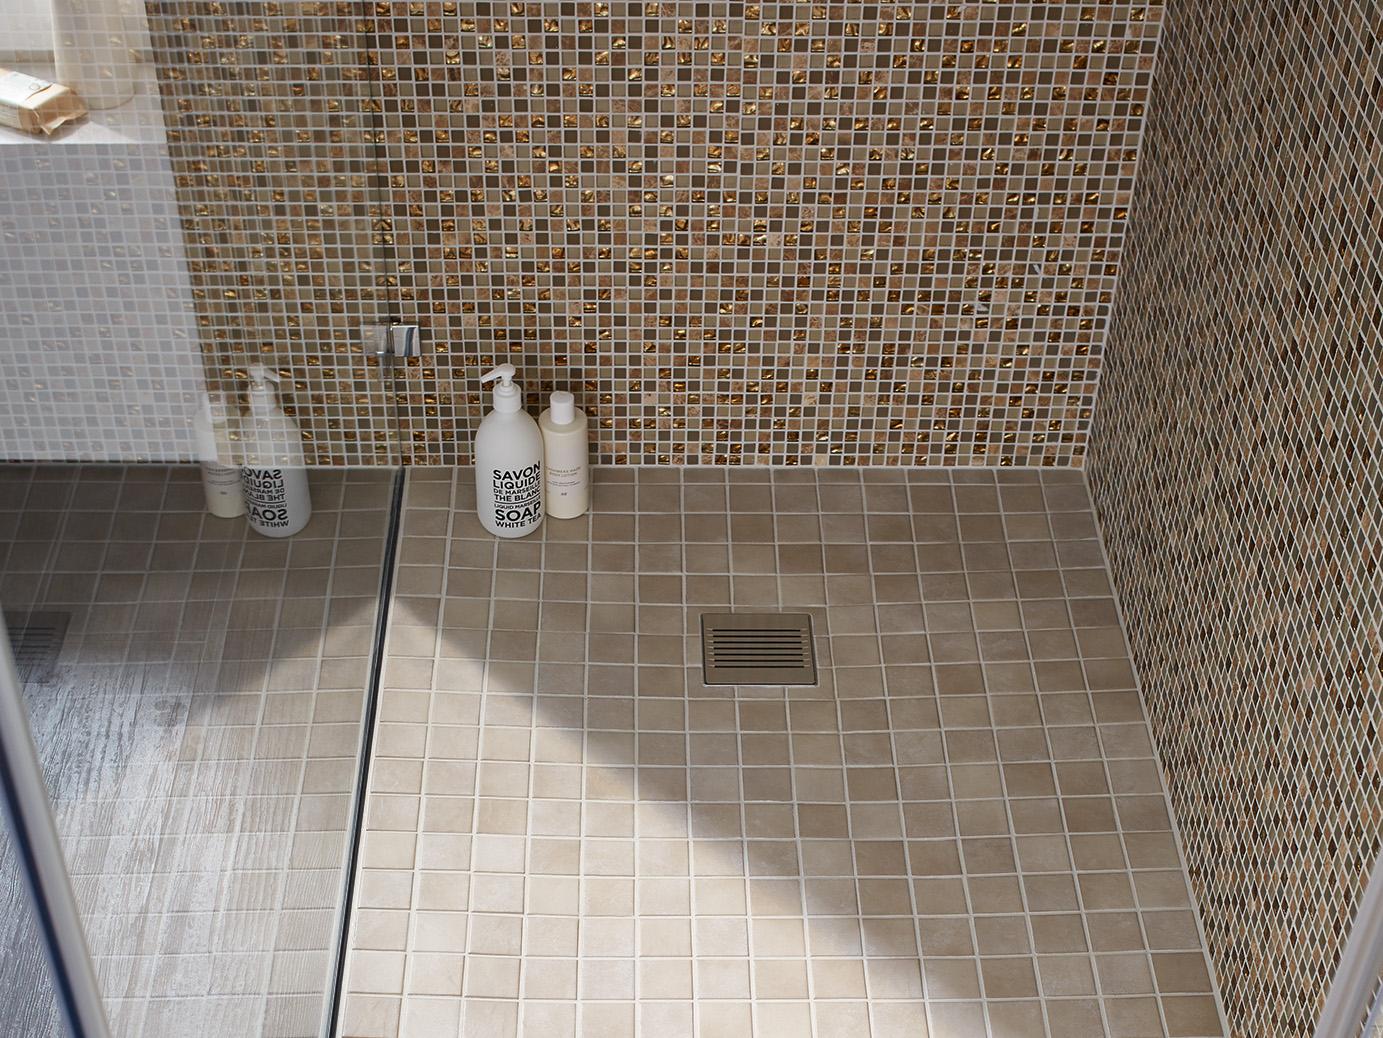 Kermi shower board with POINT point drain, barrier-free